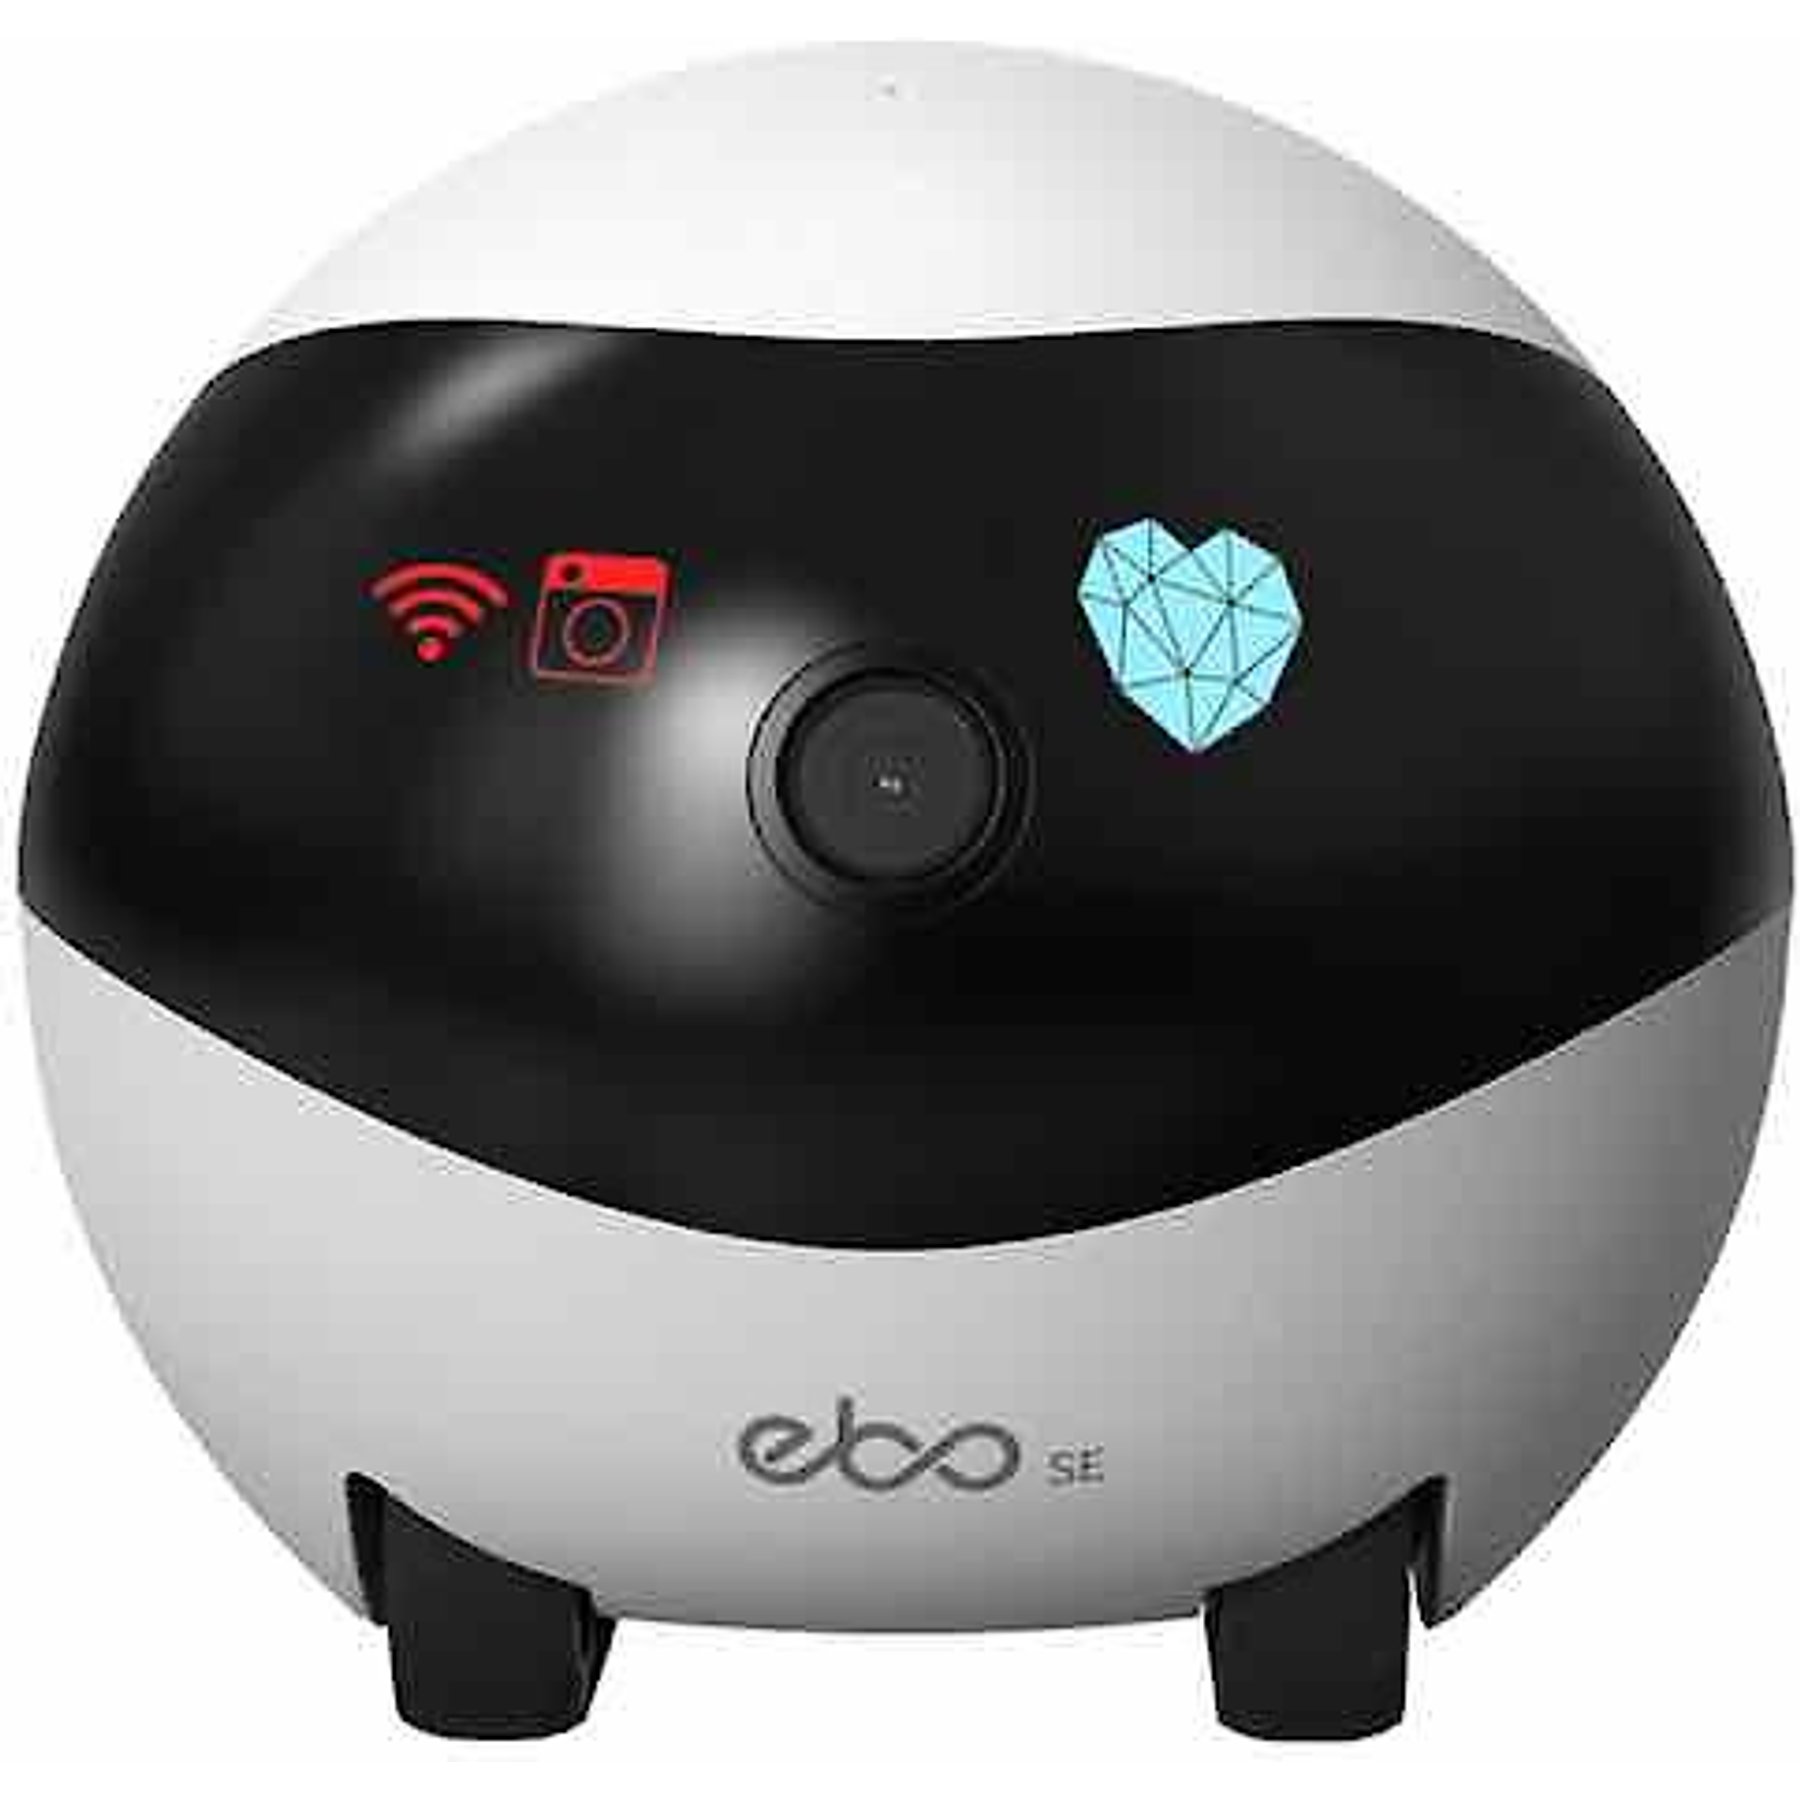 Enabot - Juego de ruedas para EBO SE Home Smart Robot Security Pet Camera